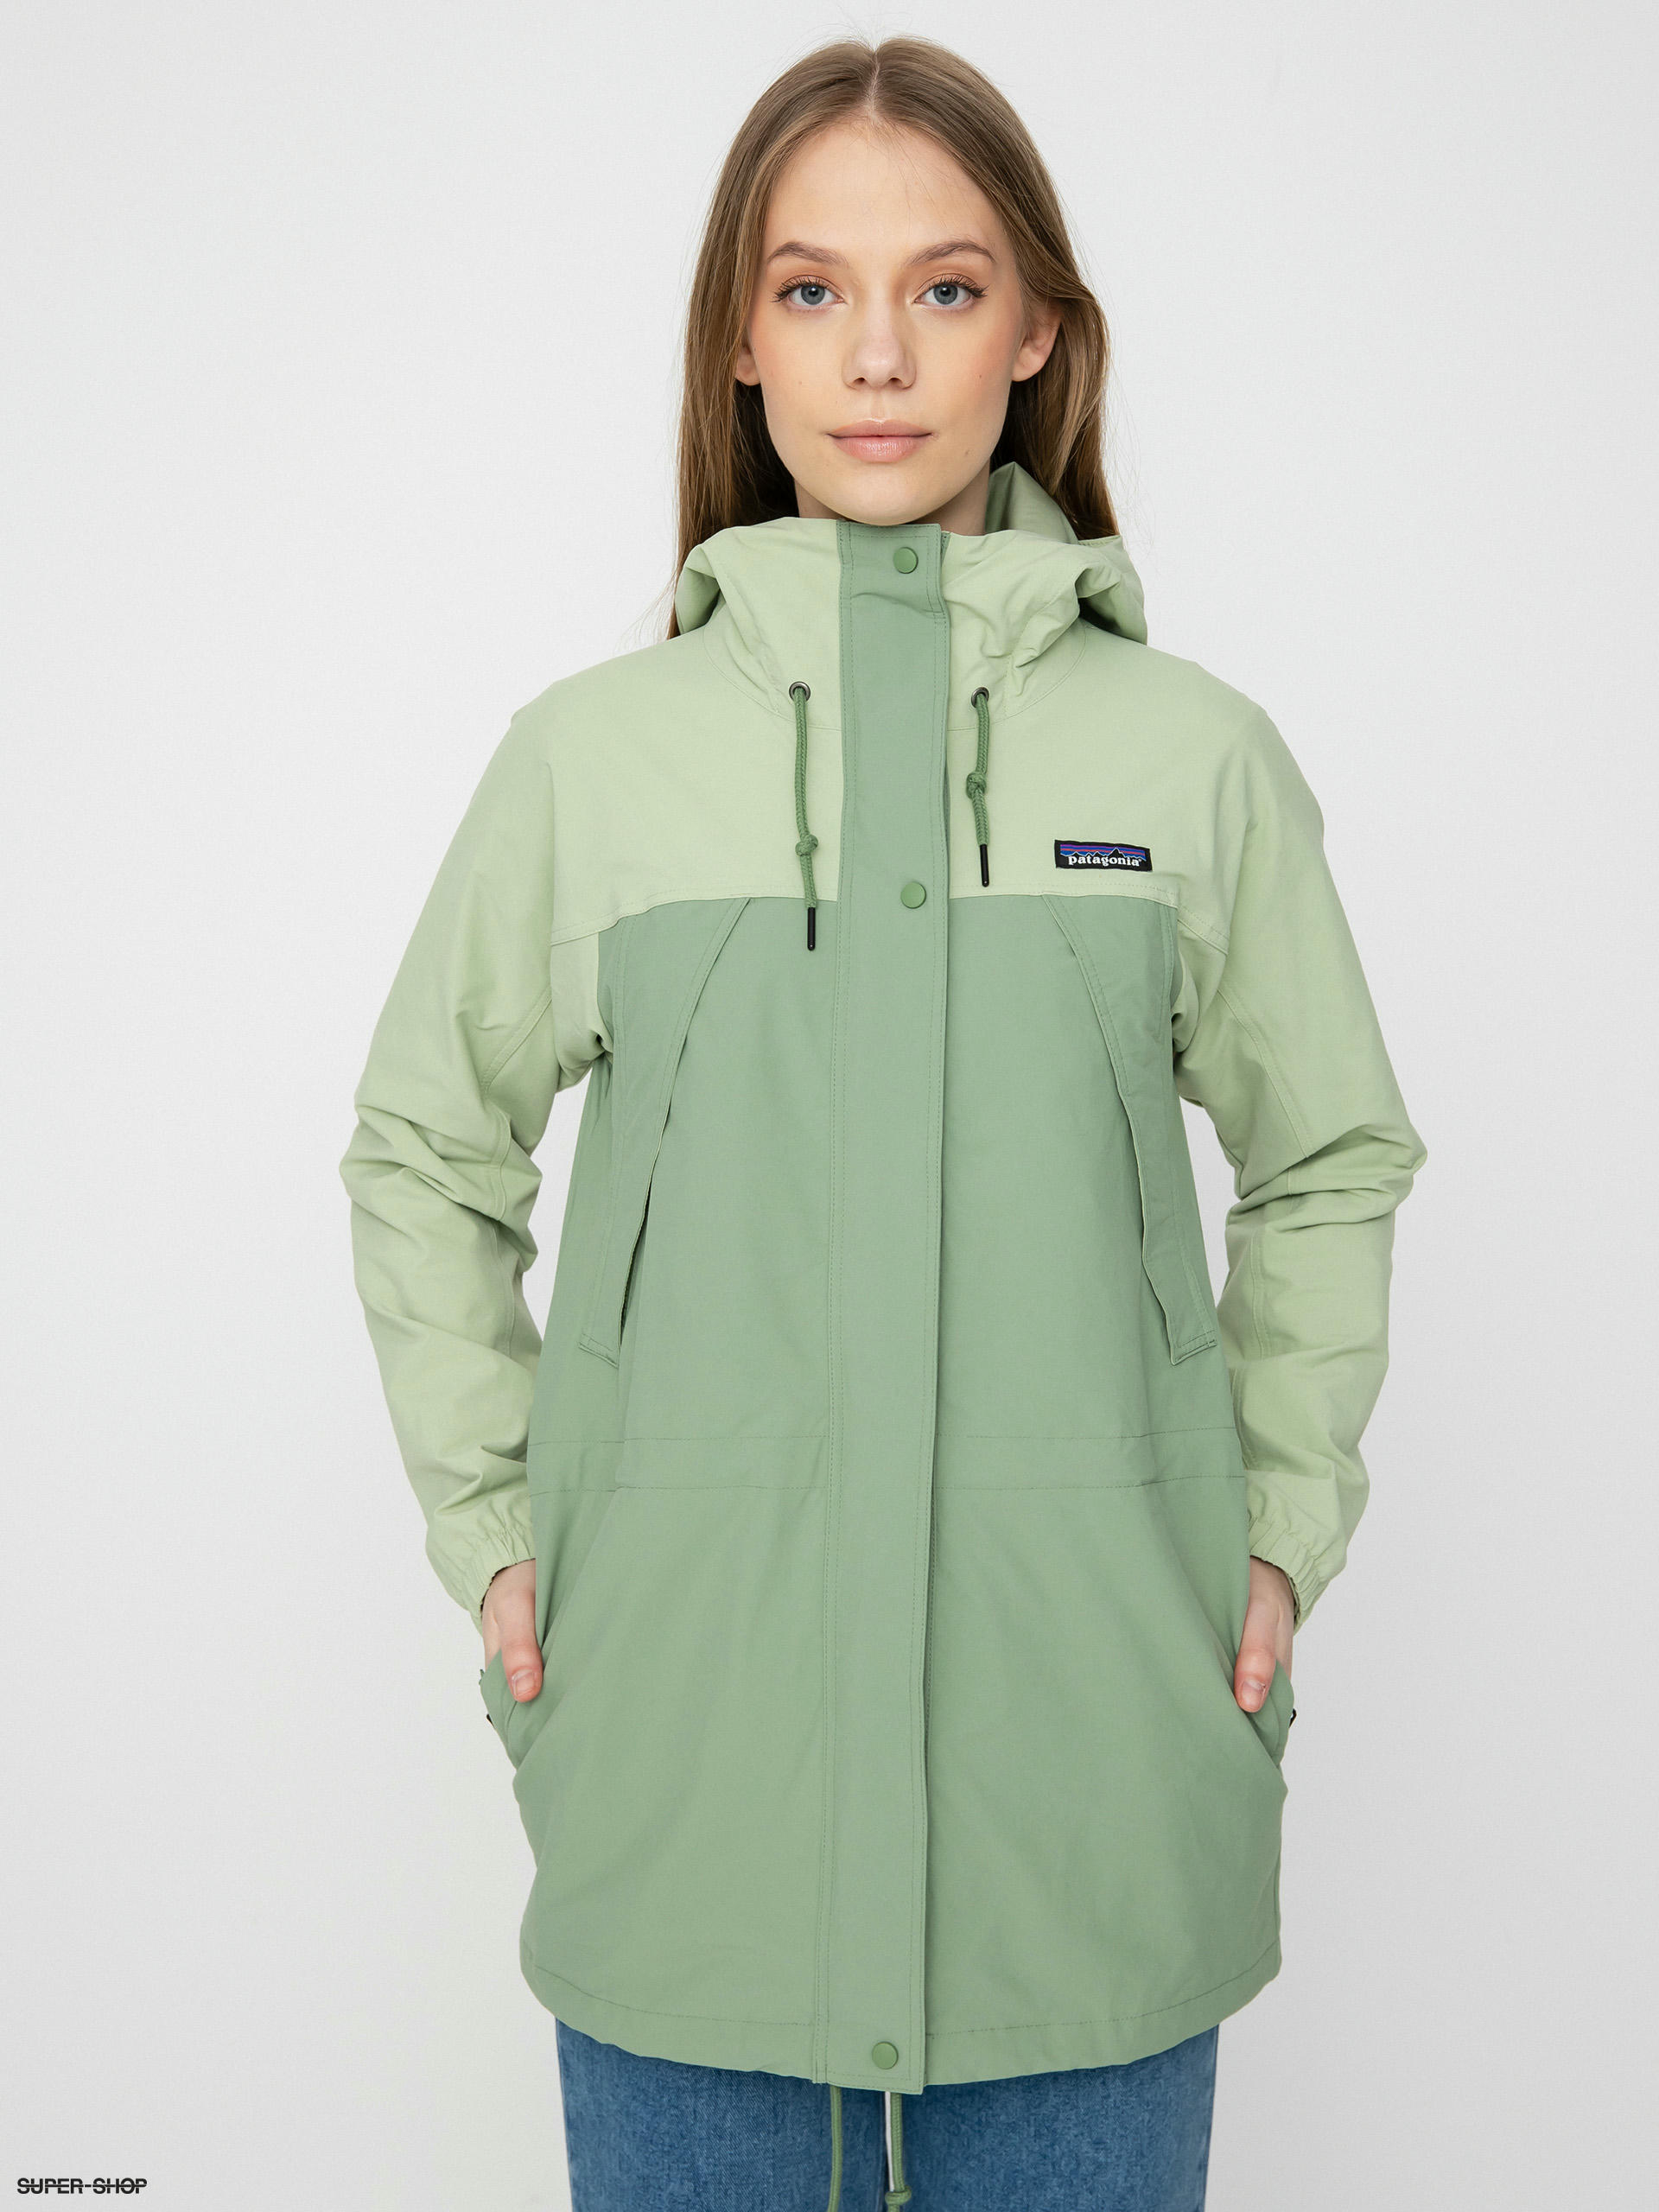 Womens Patagonia Skyforest Parka - Medium - Coats & Jackets